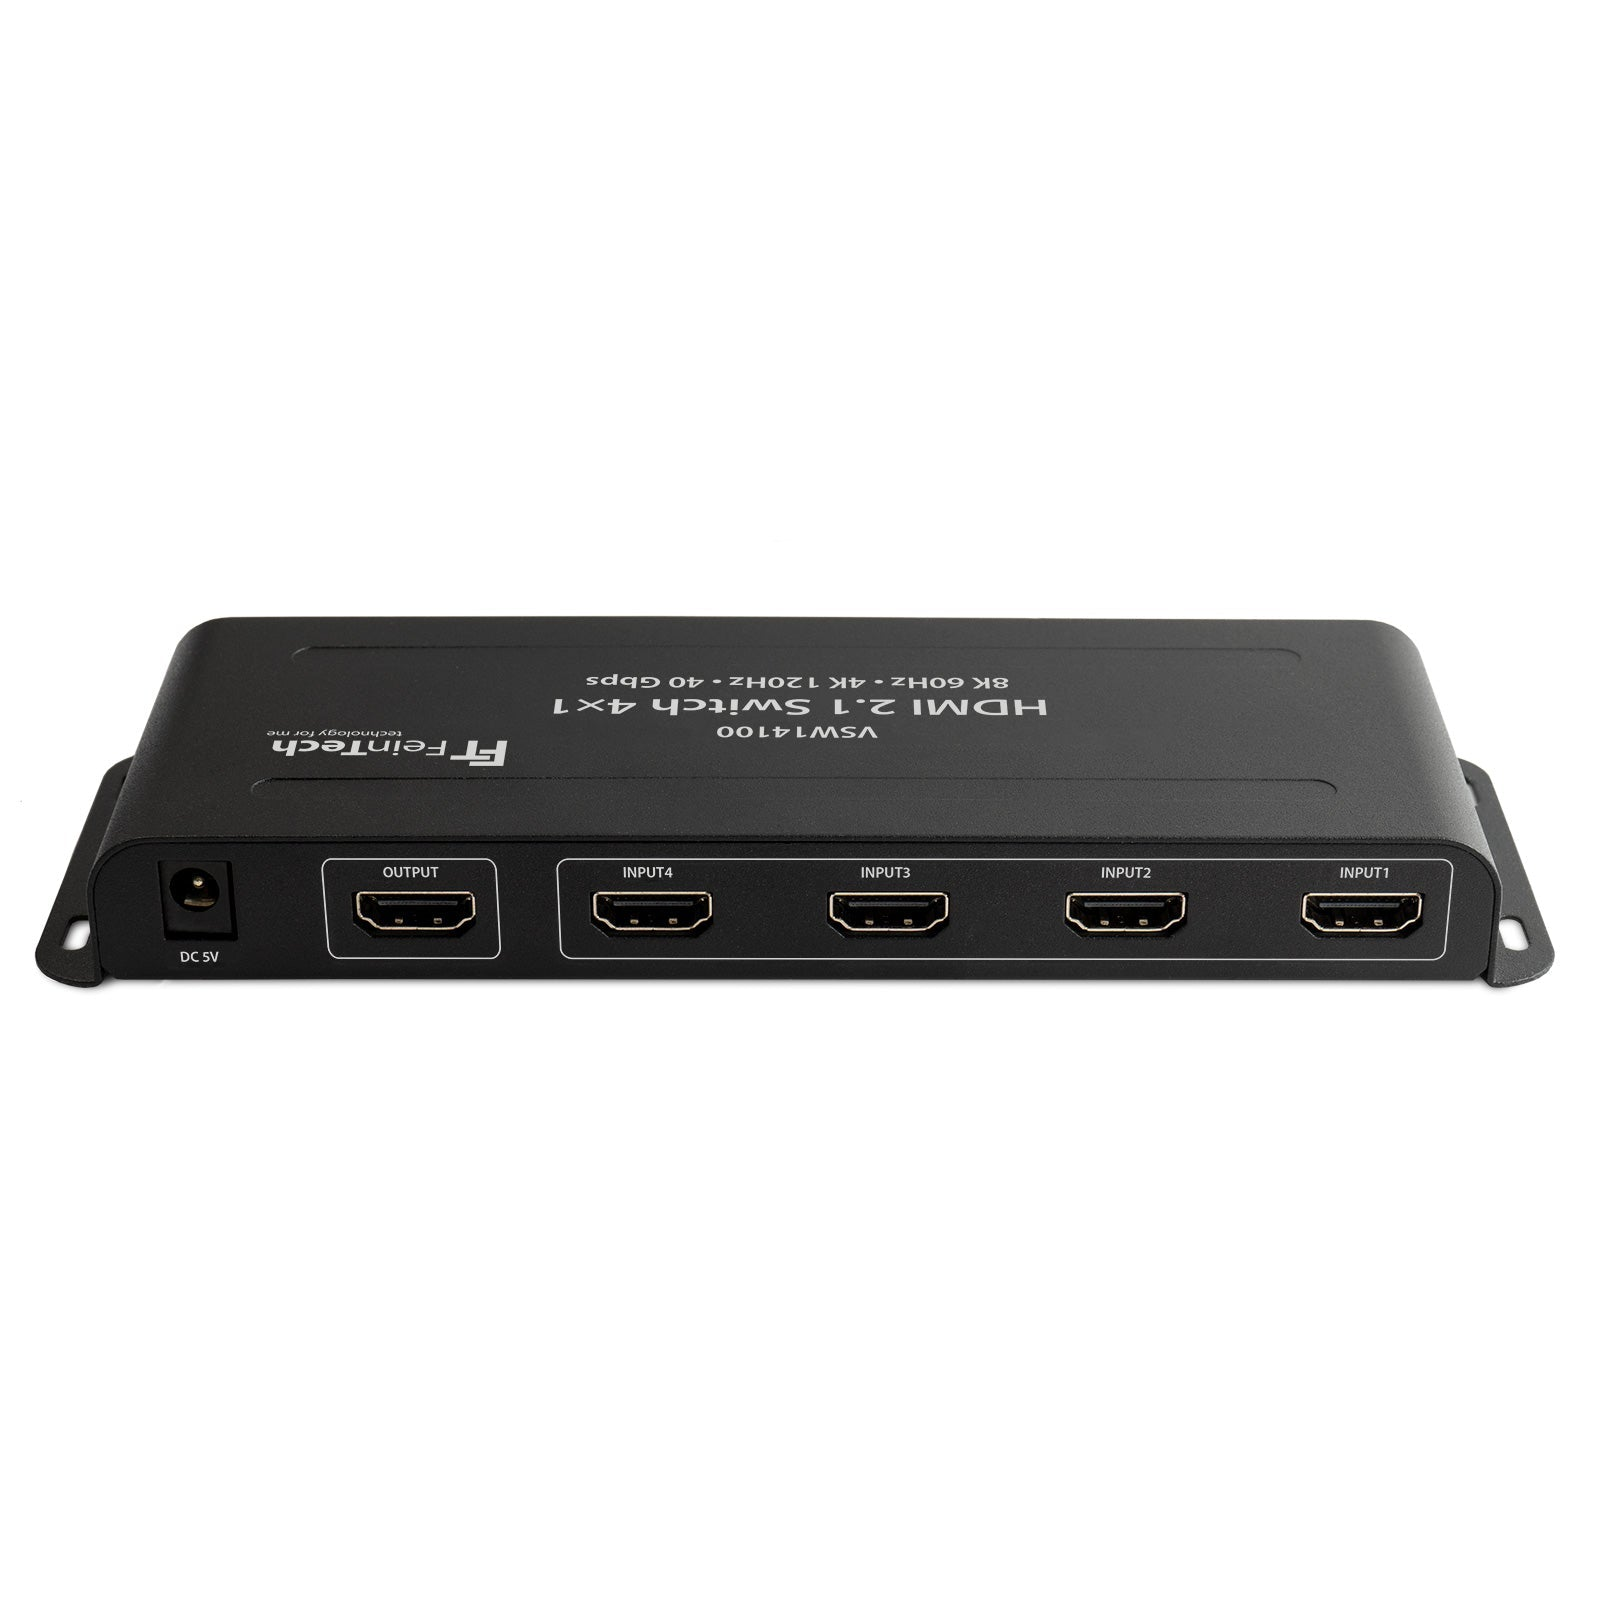 FEINTECH VSW14100 Switch Switch 8K In HDMI 1 Out 4